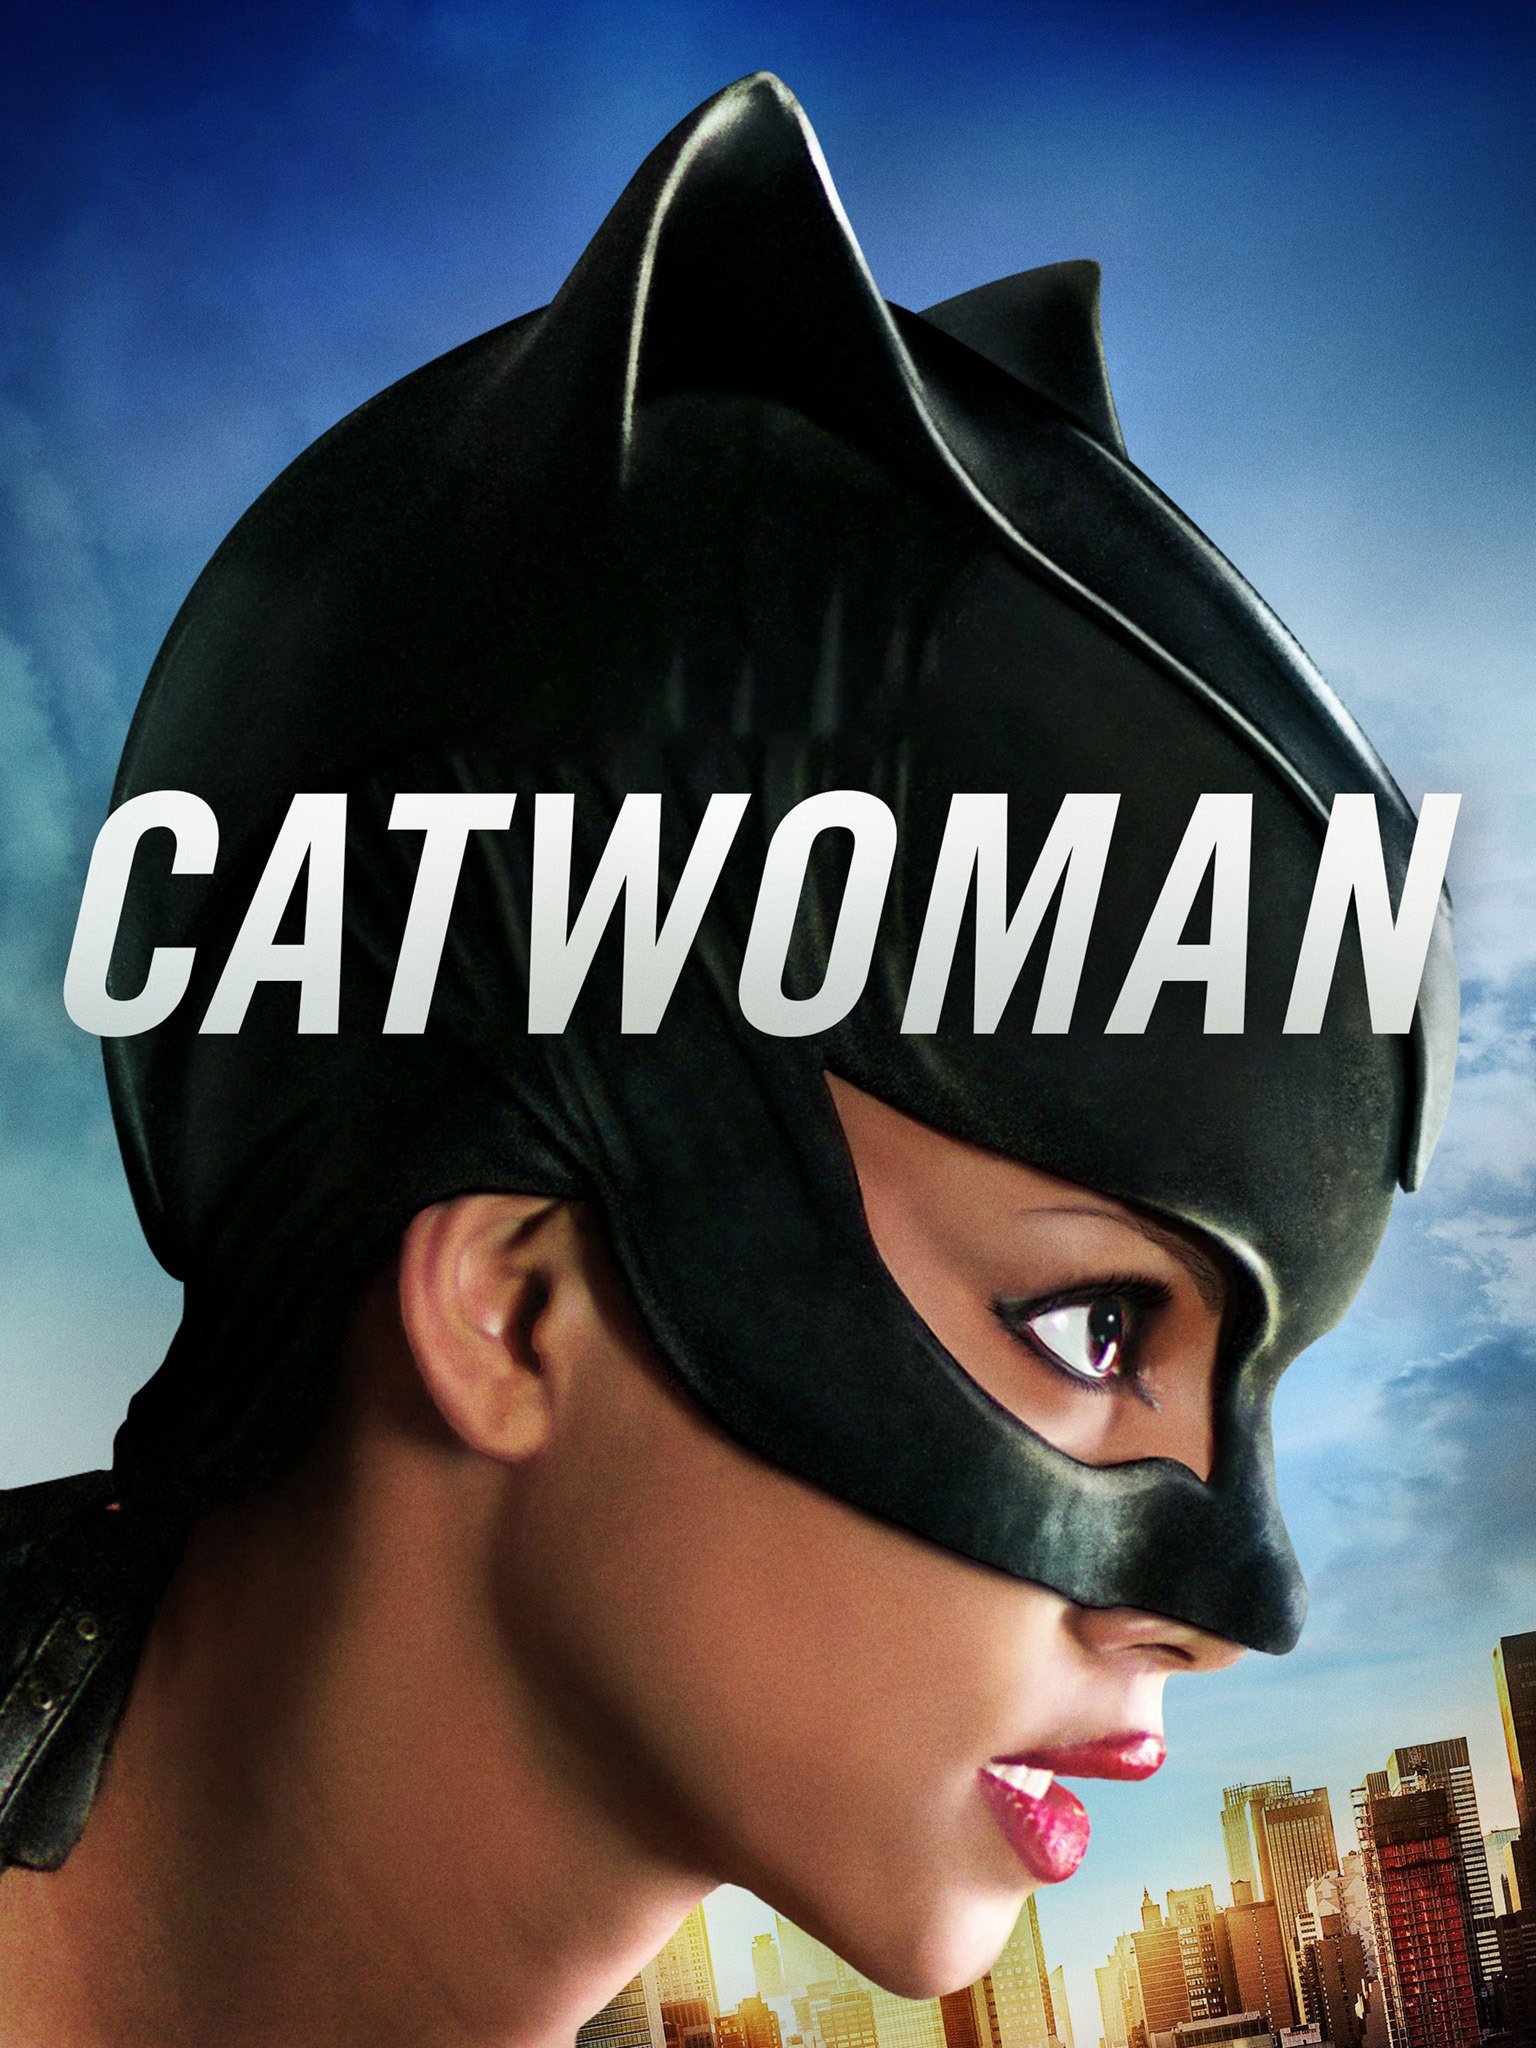 Catwoman 2004 Wallpaper